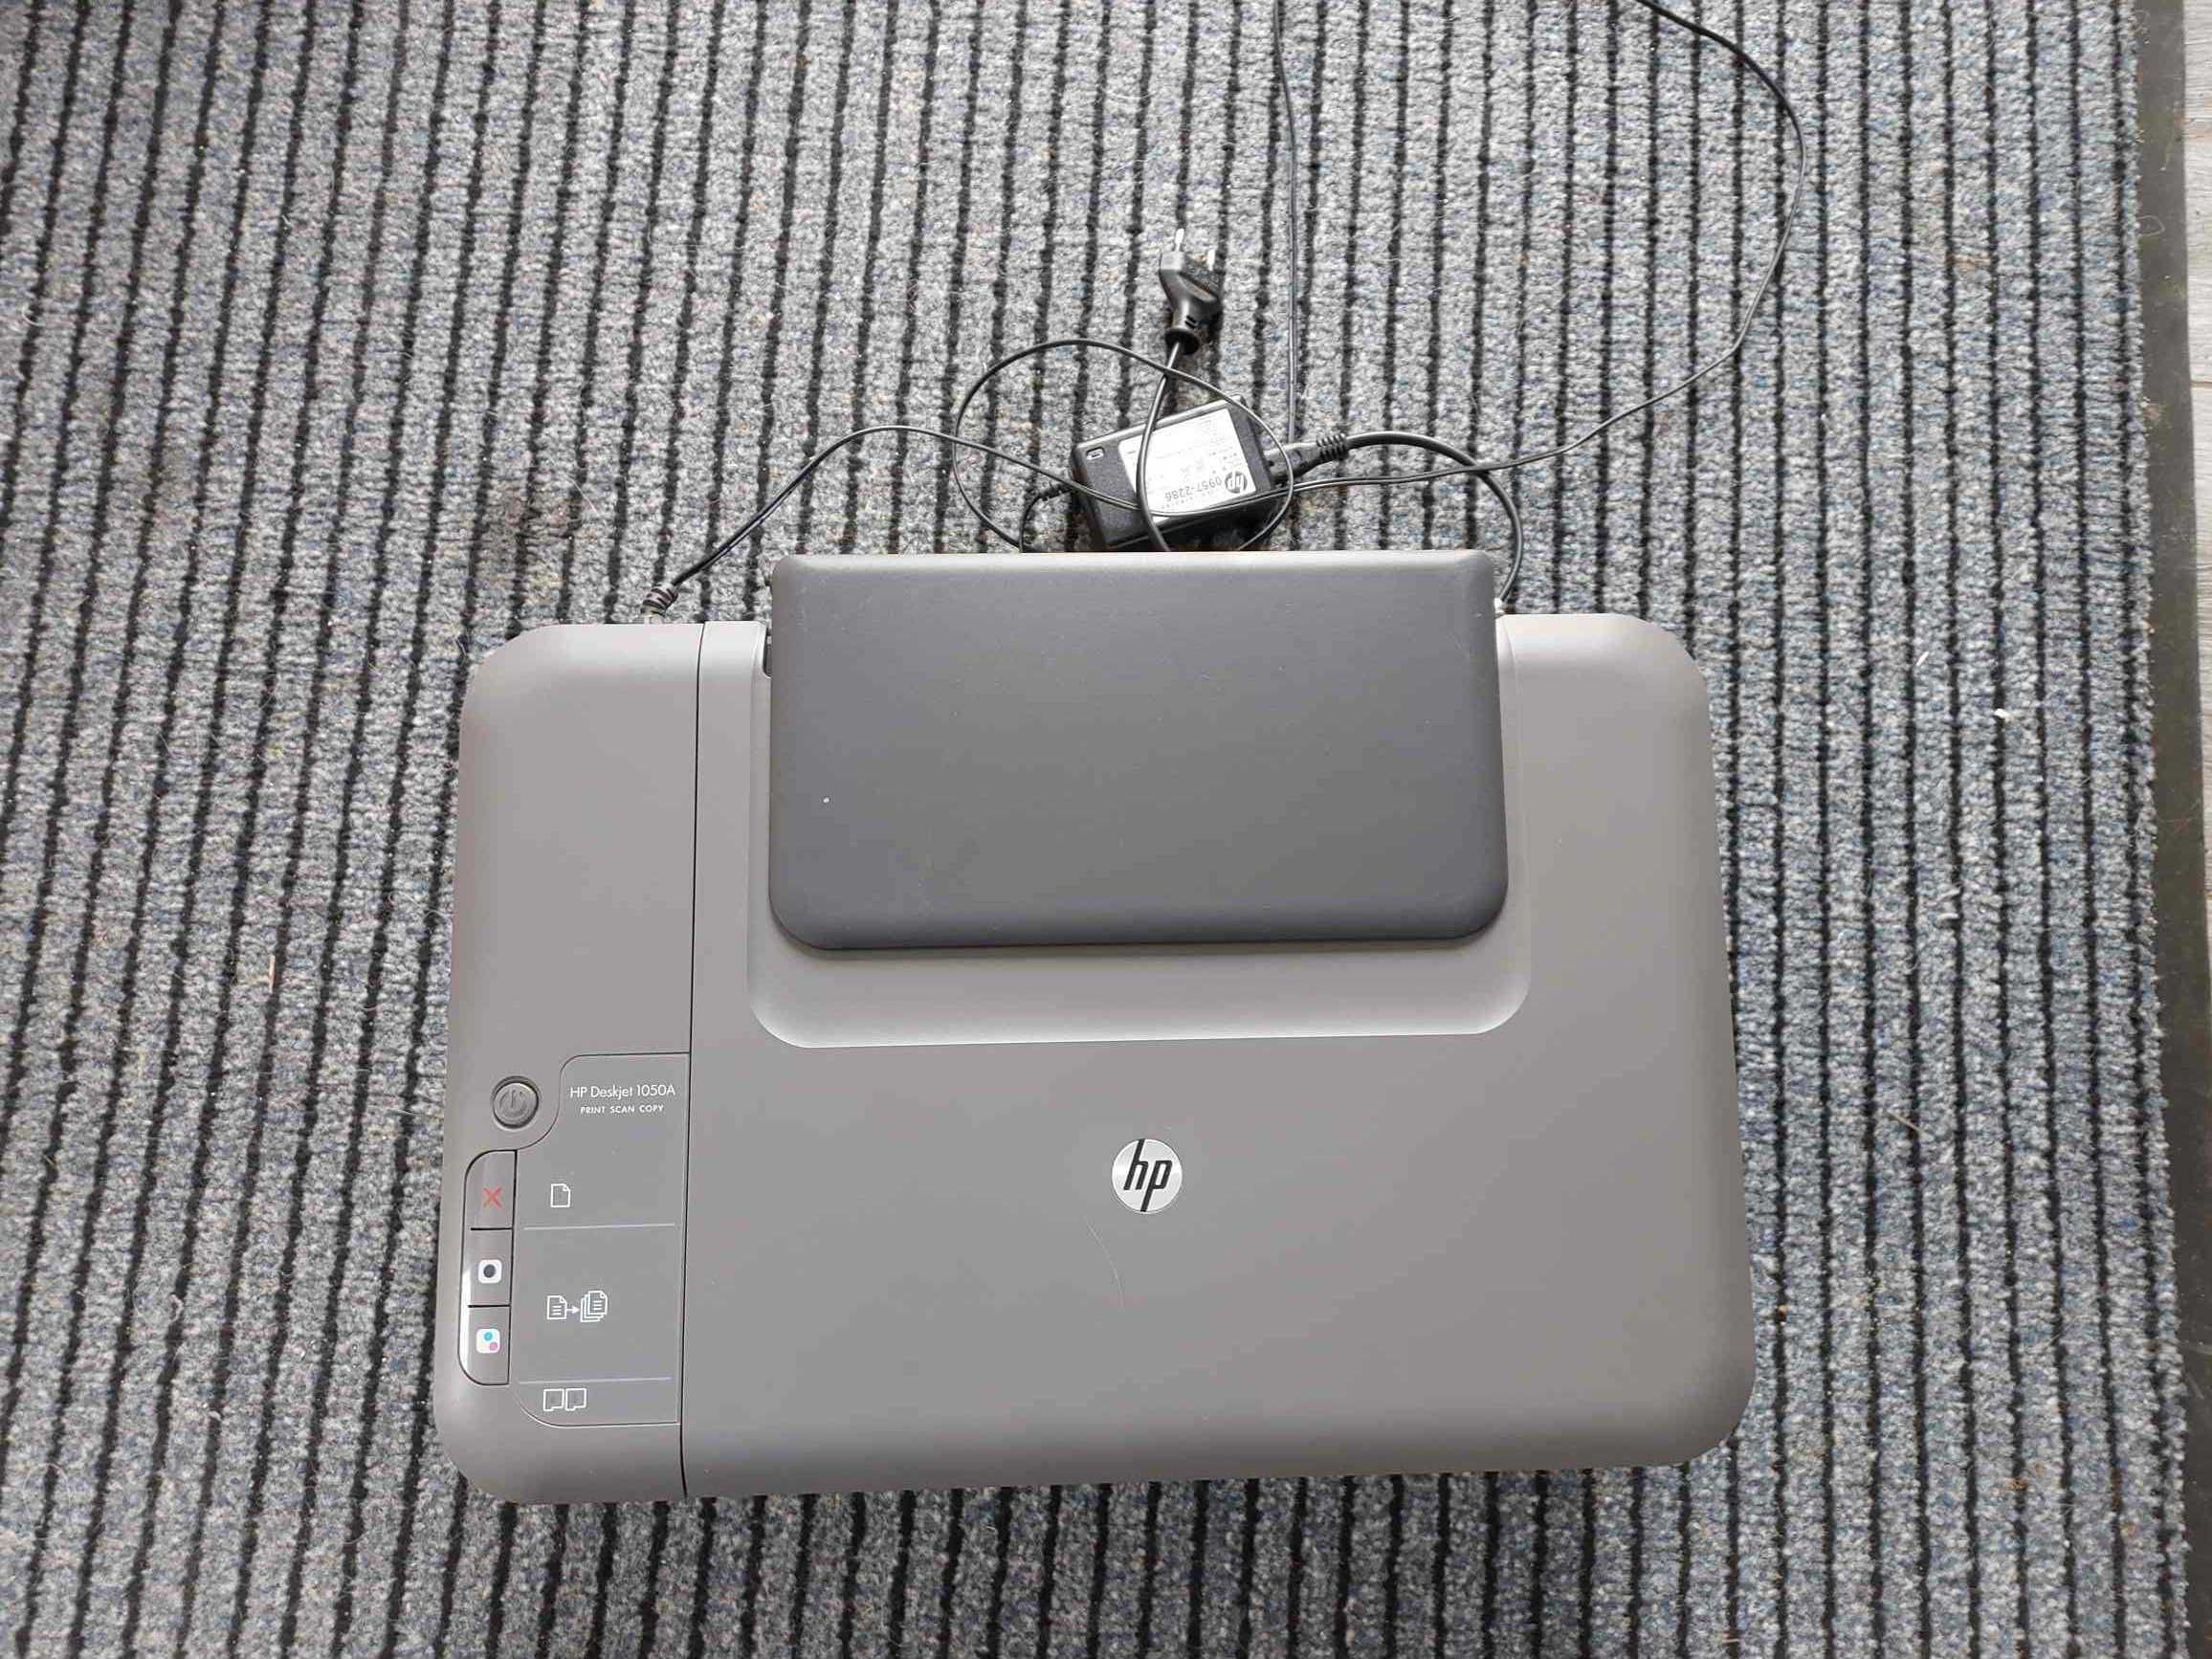 Drukarka HP 1050A drukarka ksero skaner dom biuro kartka wyposażenie